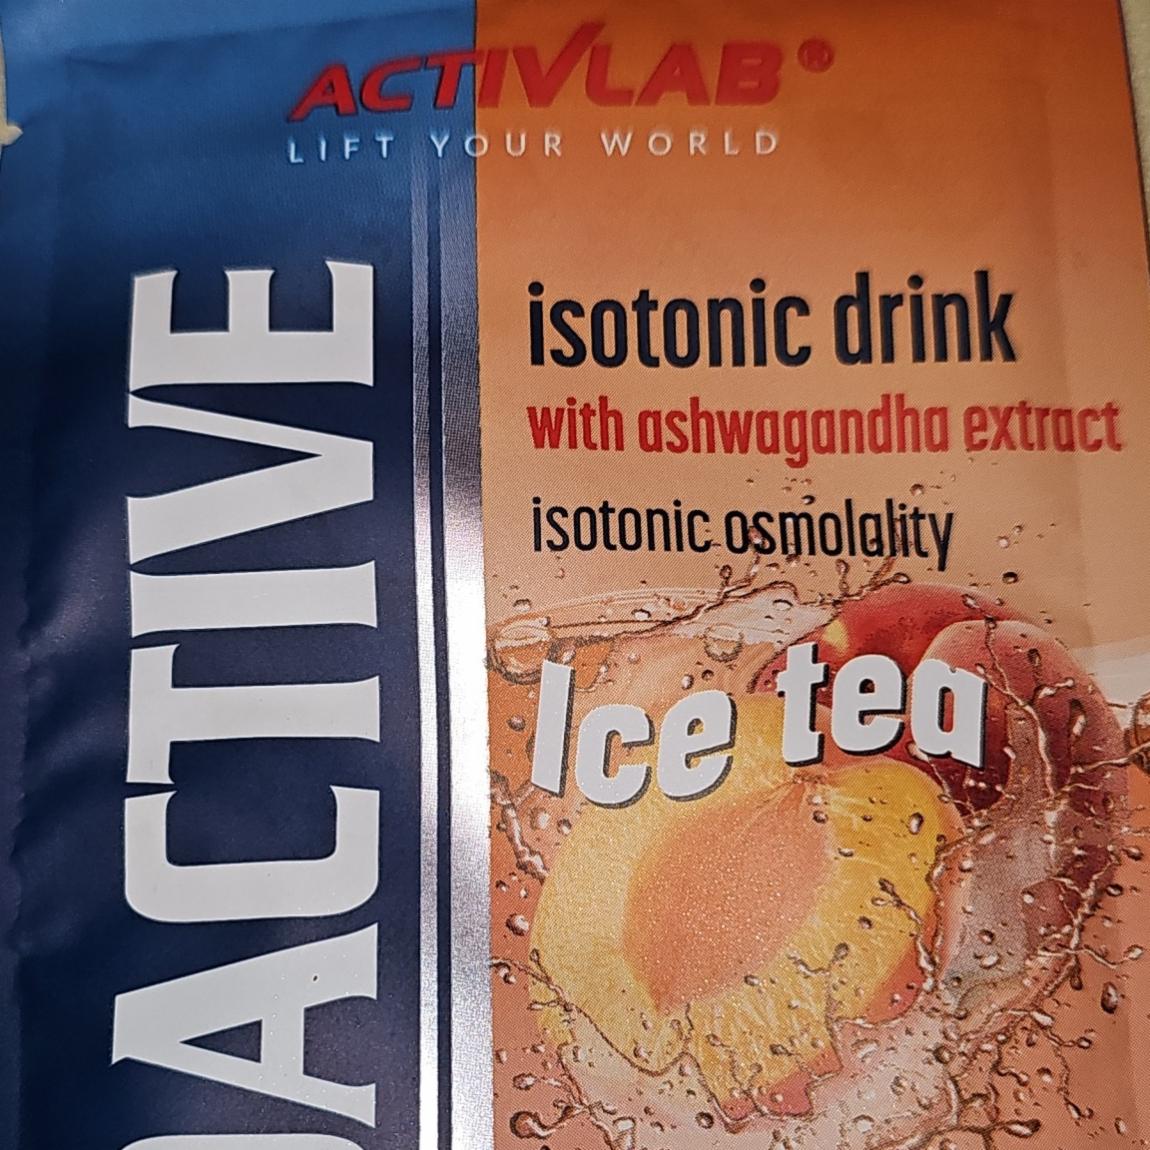 Képek - Isotonic drink with ashwagandha Ice Tea ActivLab